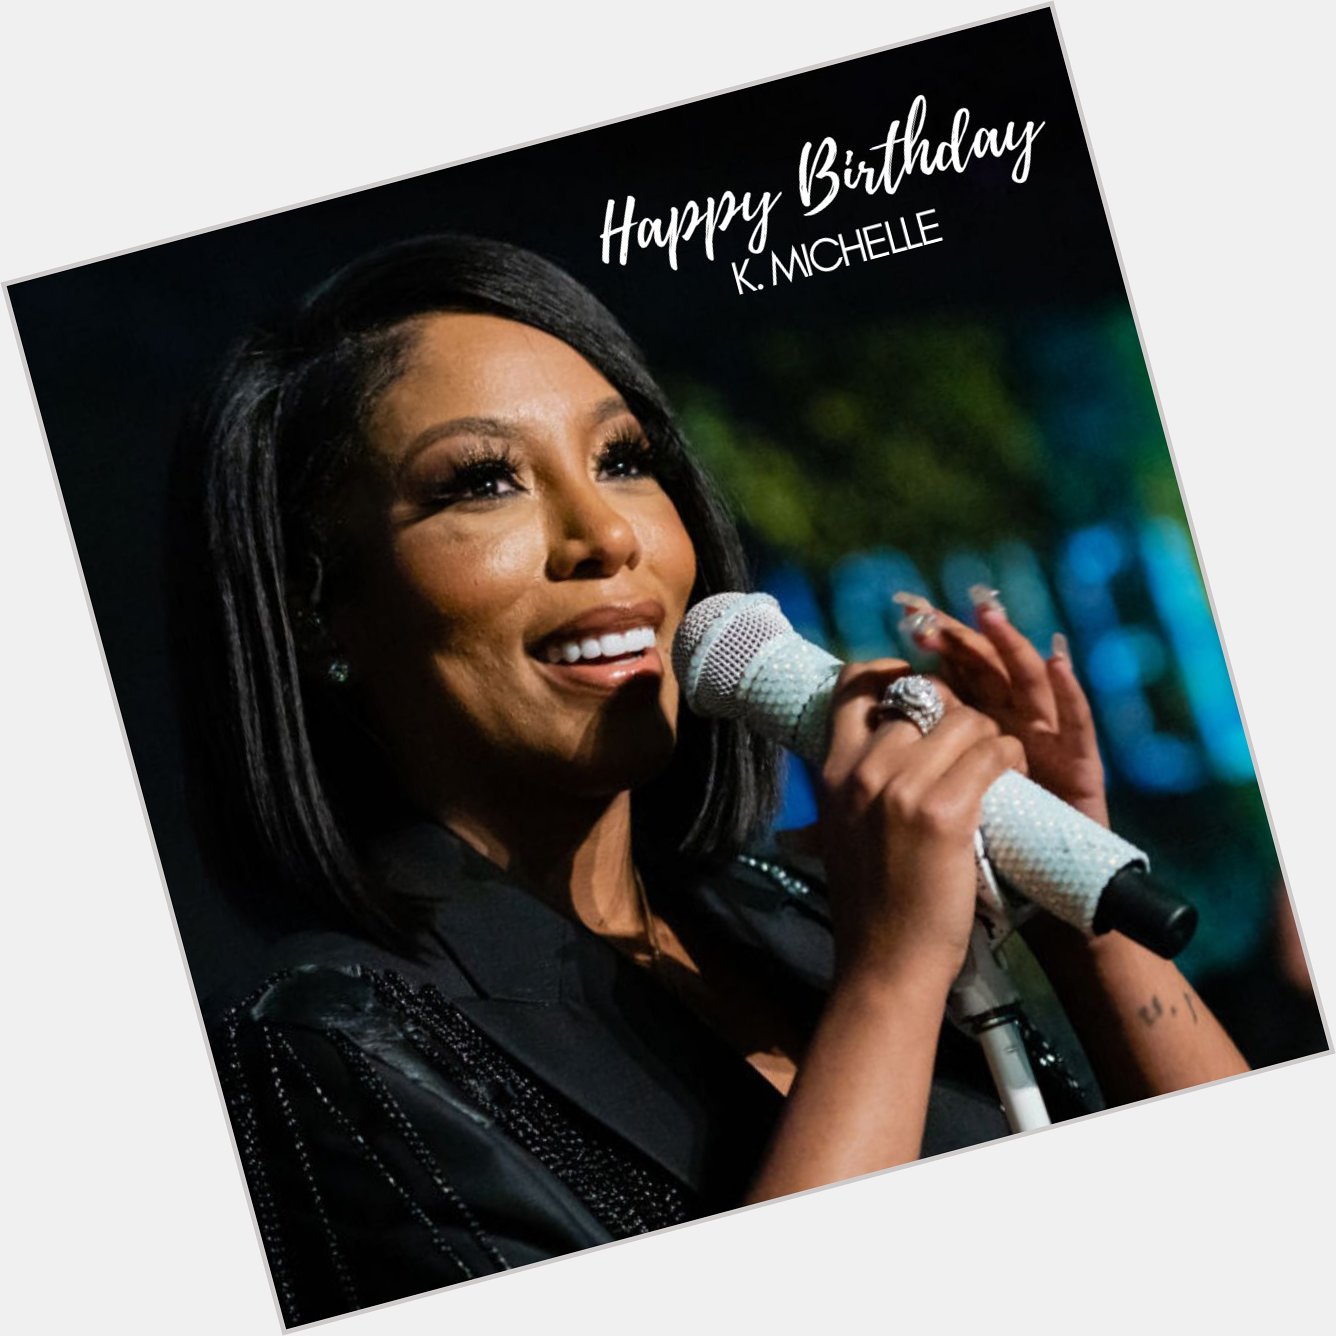 Happy 34th birthday K. Michelle! 